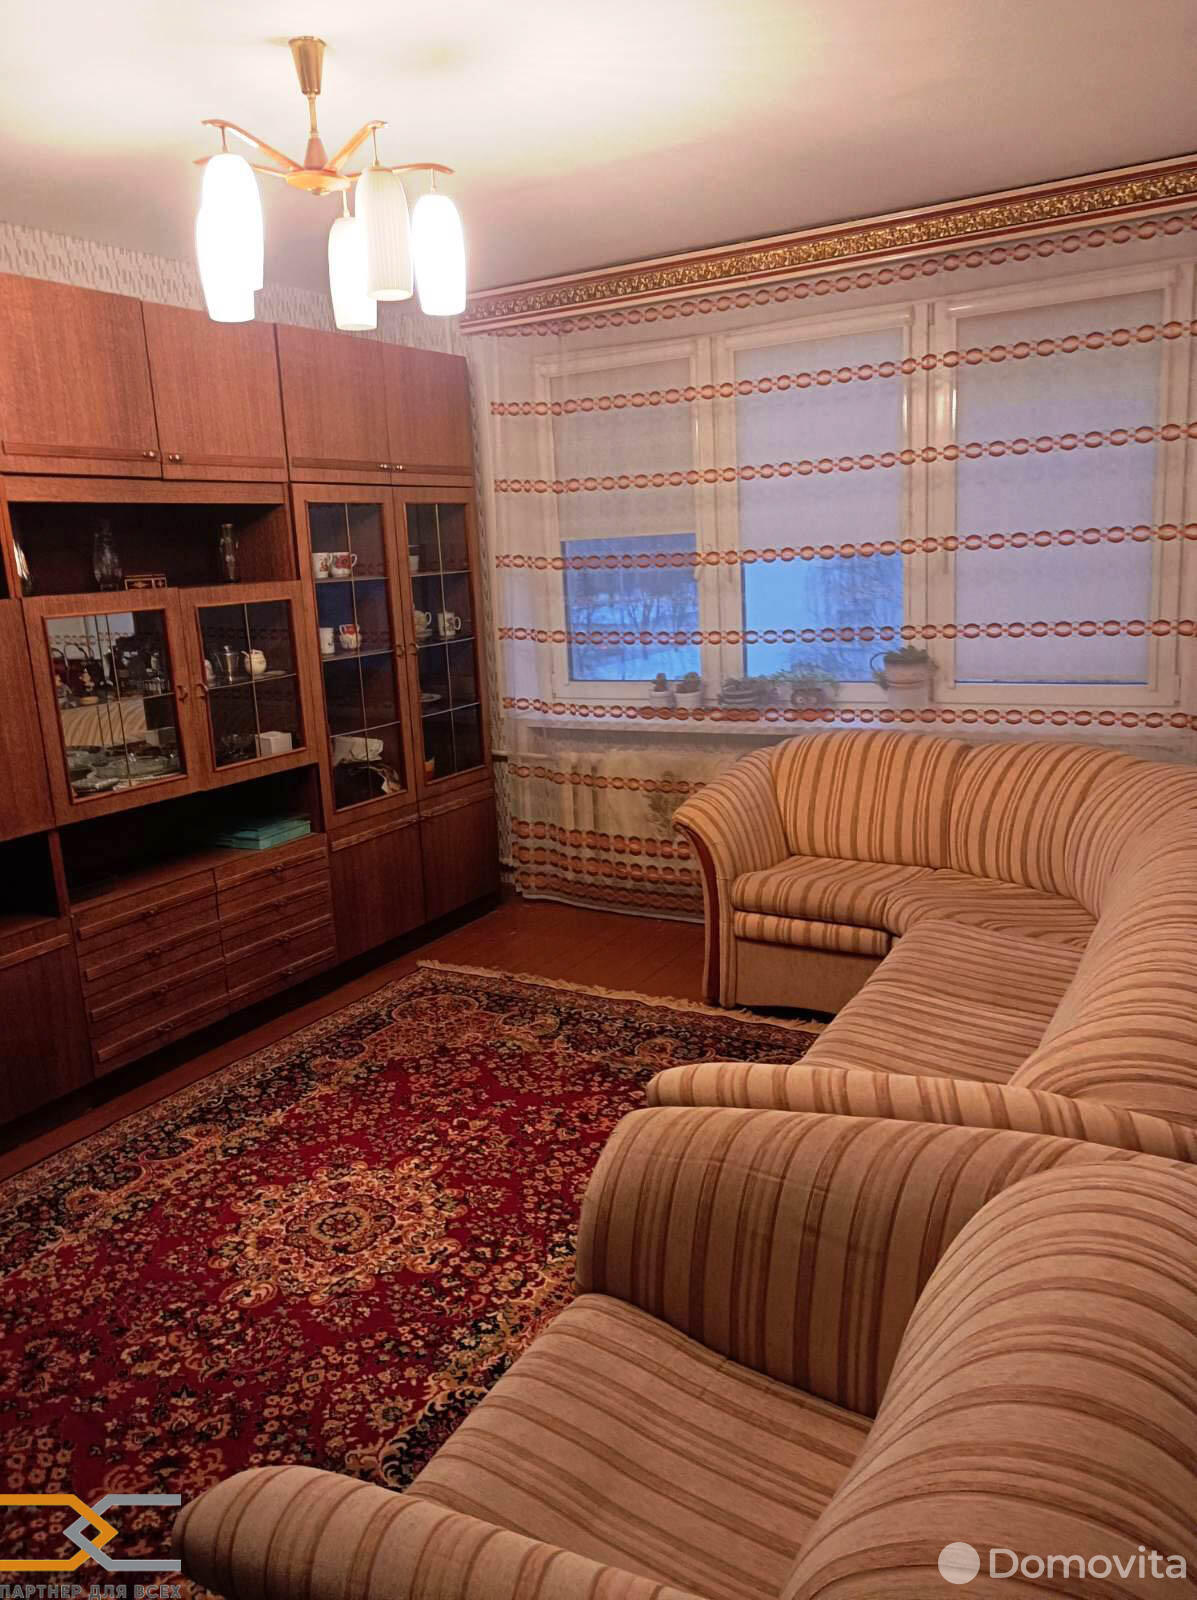 Аренда 3-комнатной квартиры в Минске, пр-т Партизанский, д. 72, 340USD - фото 1